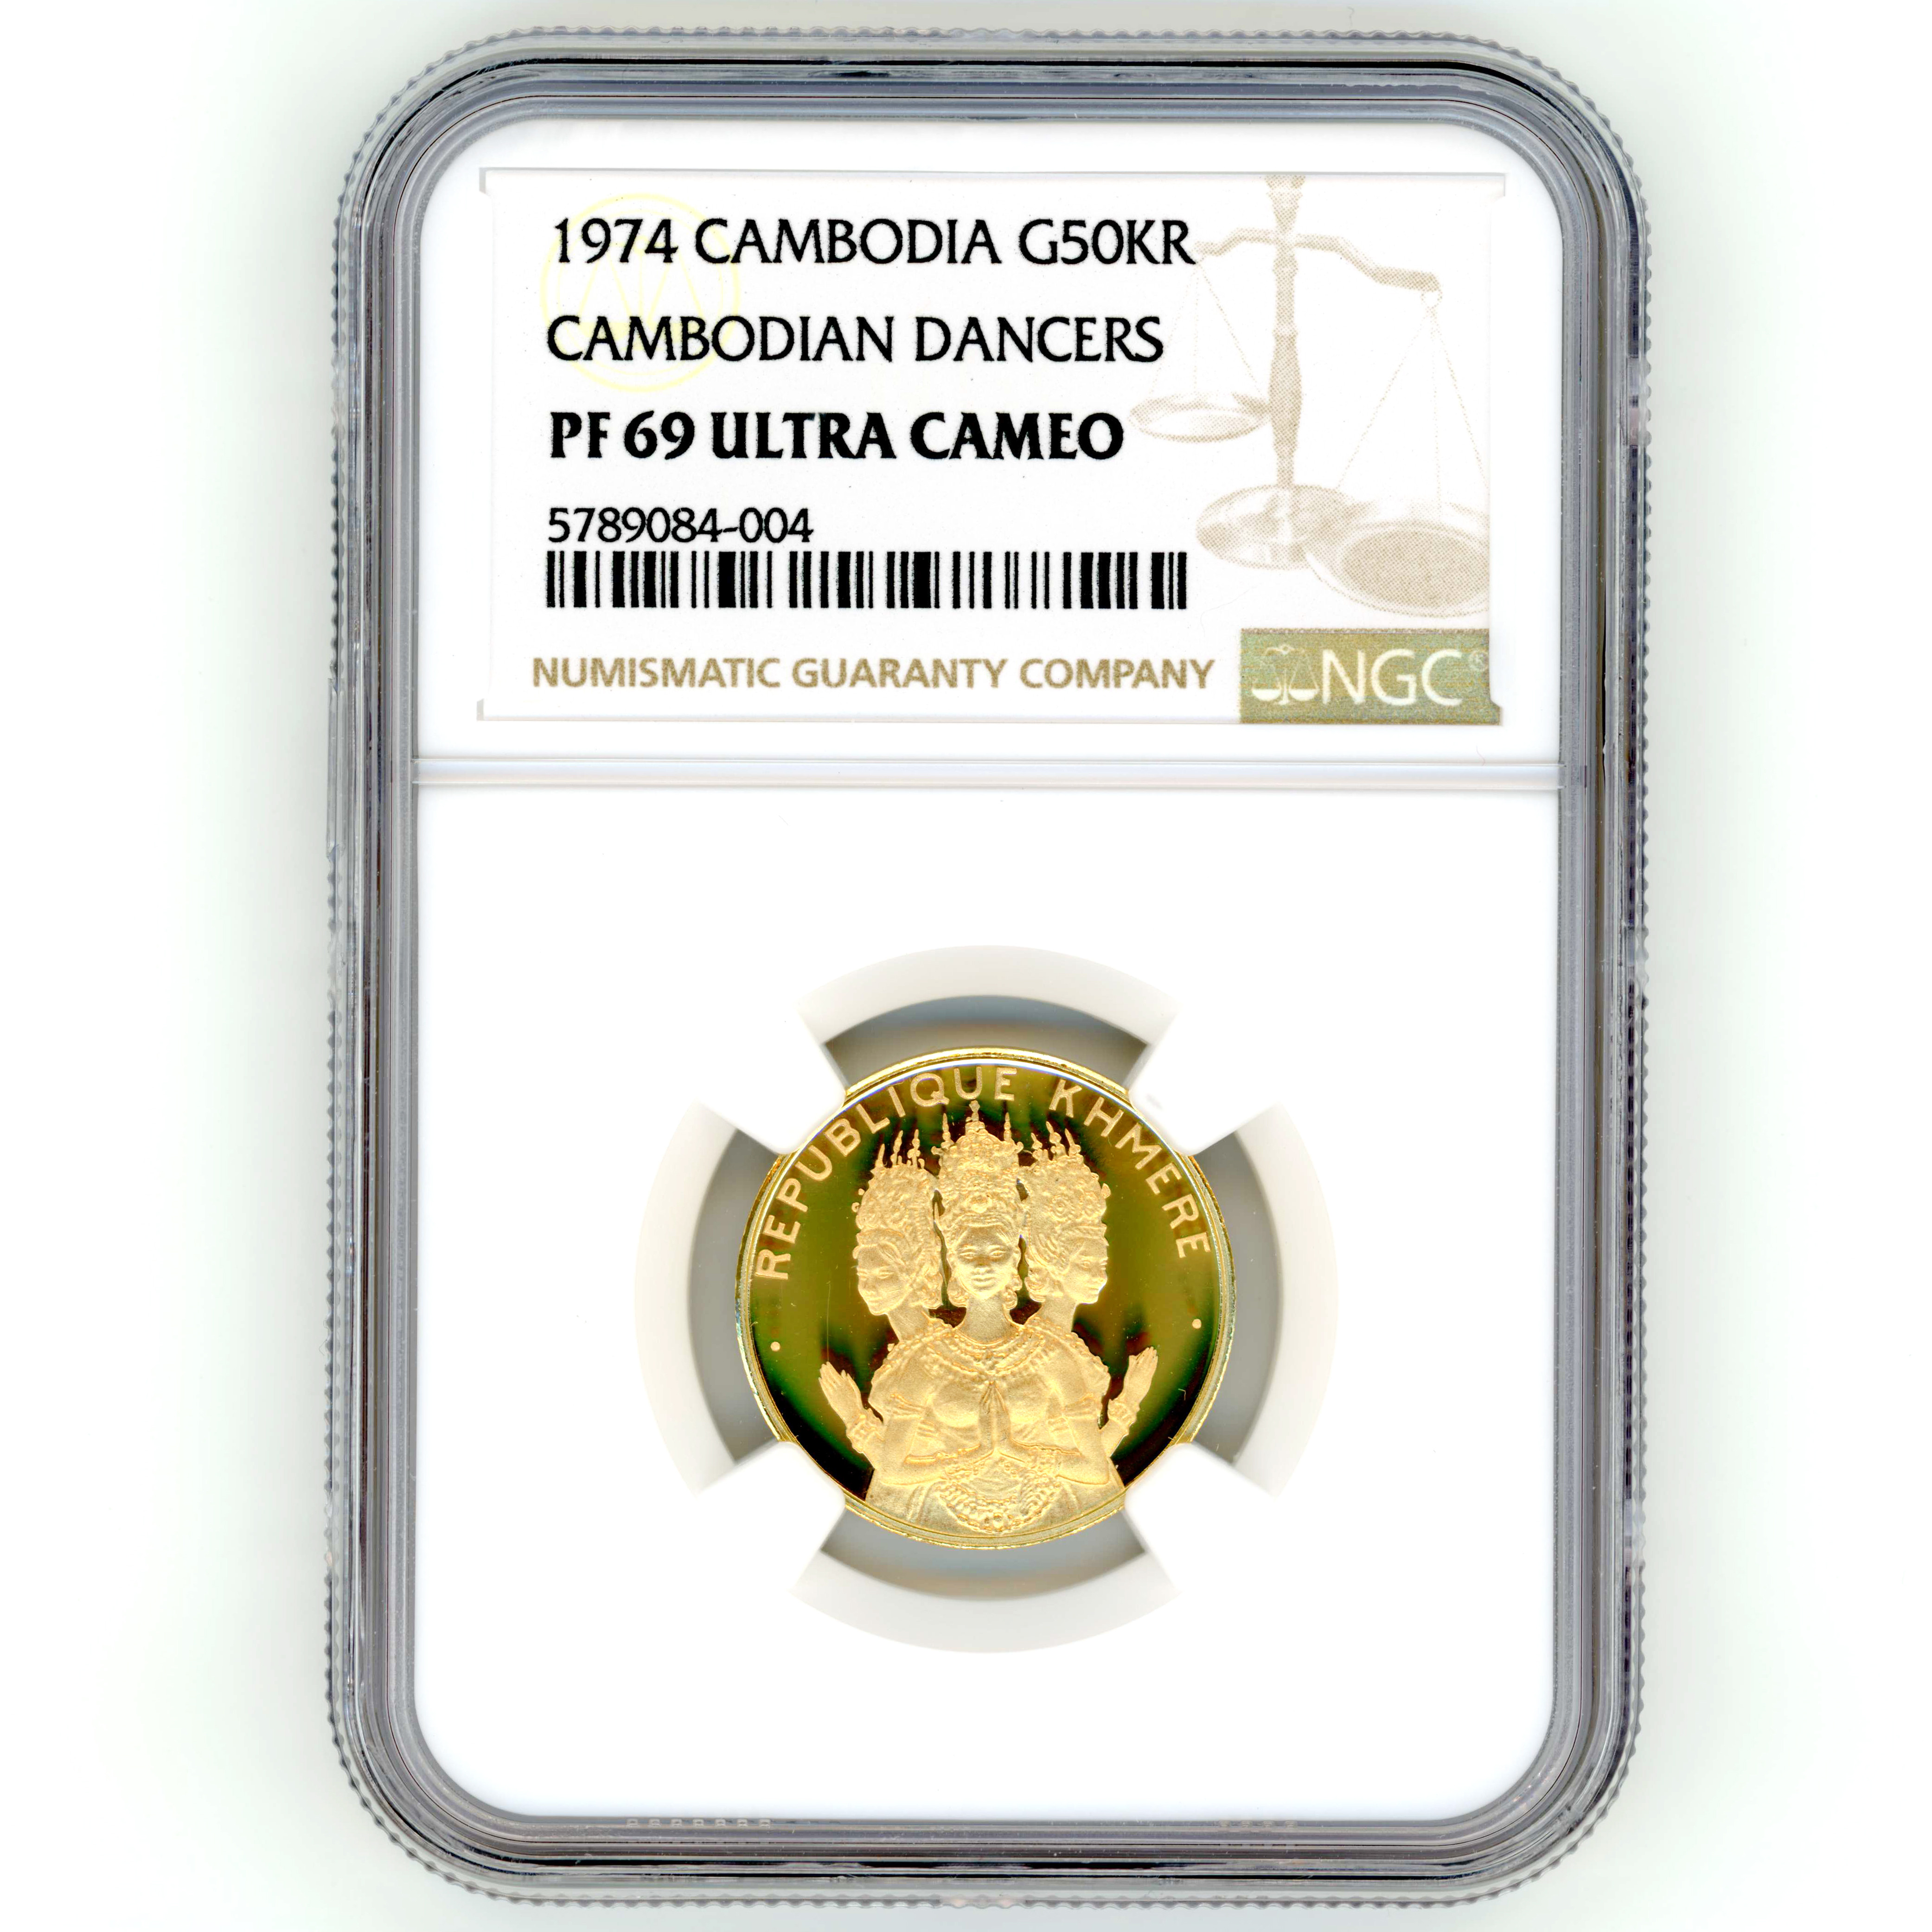 Cambodge - 50 000 Riels - 1974 avers